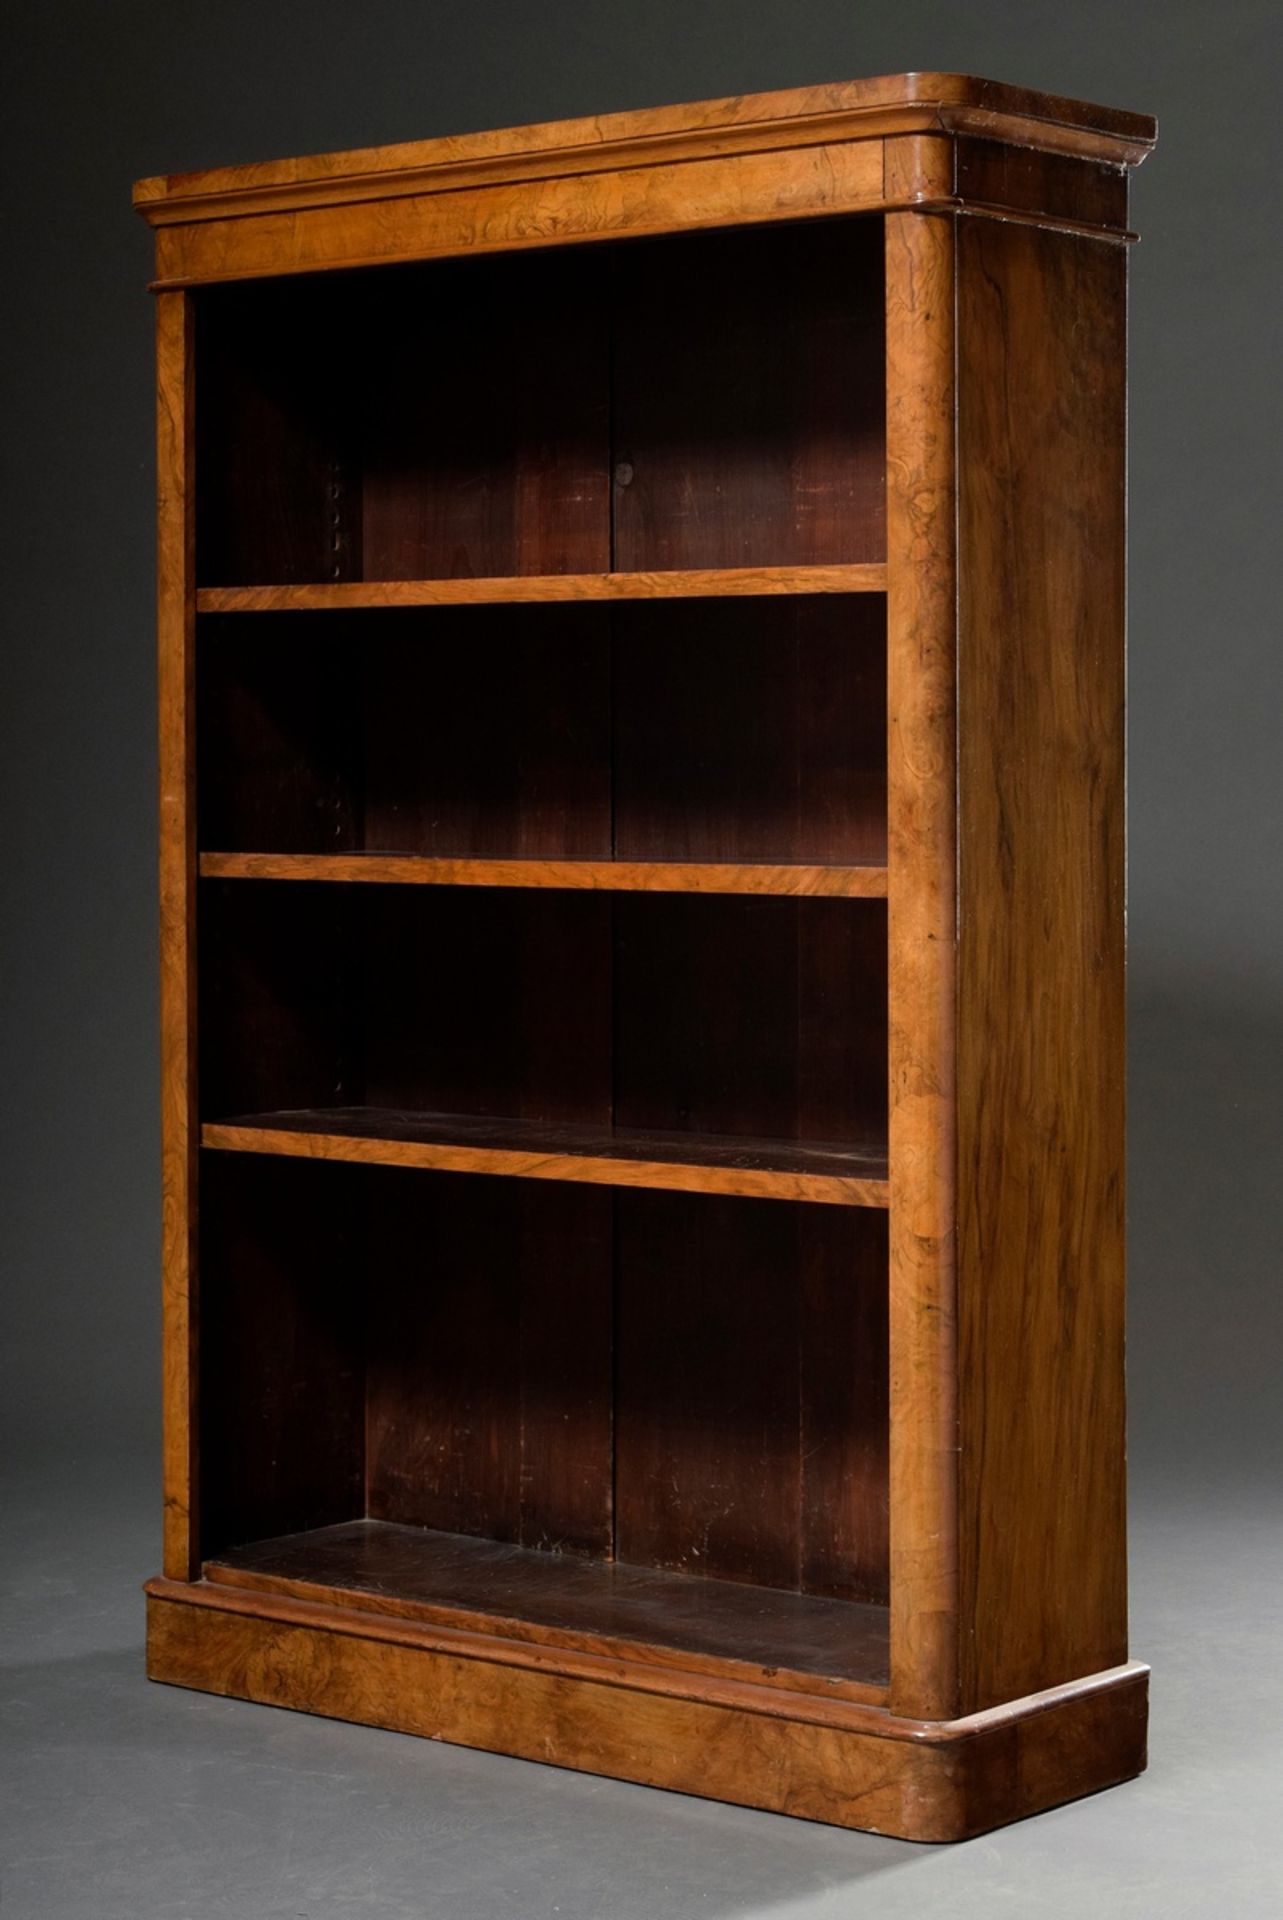 Small half-height late Biedermeier bookcase, walnut veneer, 135x86x38cm, defective